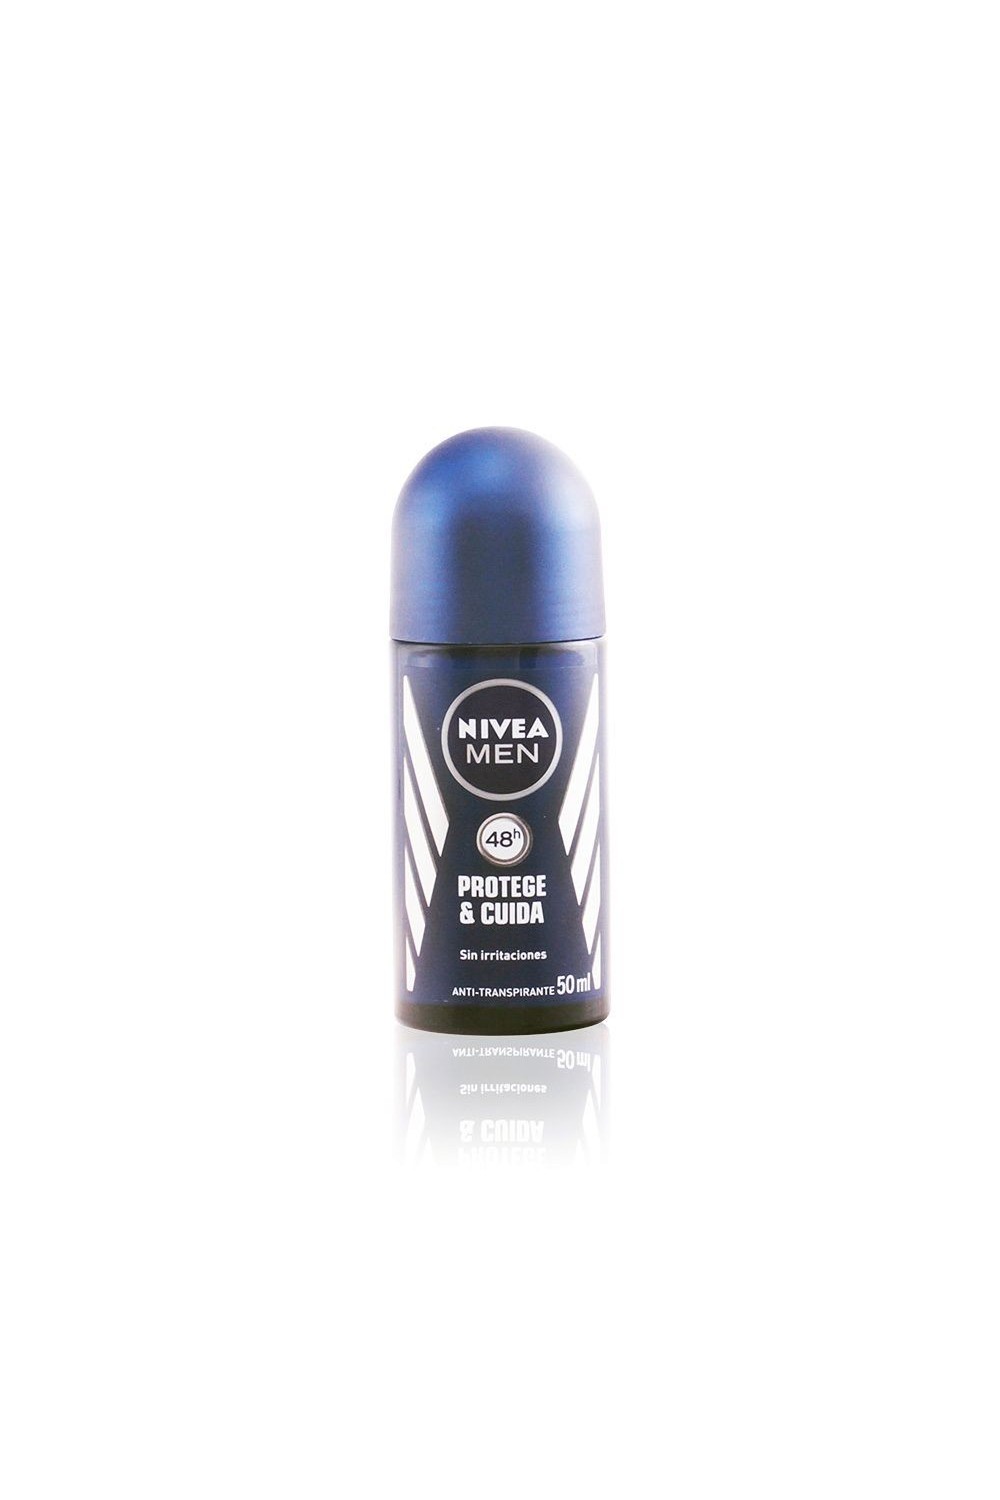 Nivea Men Protect And Care Deodorant Roll On 50ml